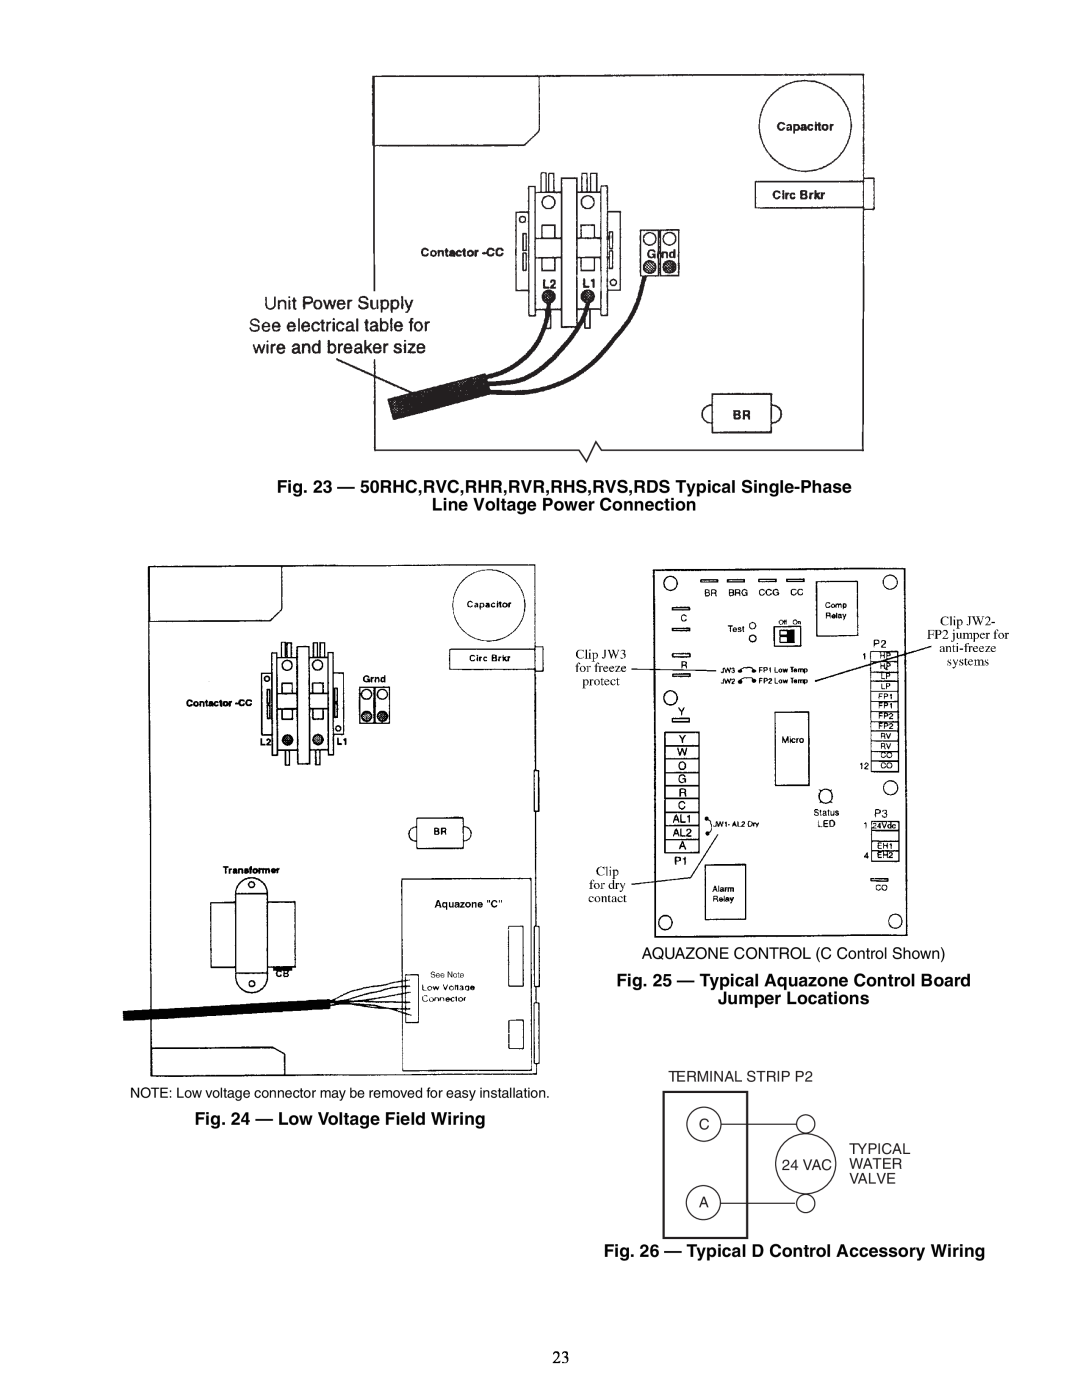 Carrier RVR, RVS, RHR a50-8162, Line Voltage Power Connection, a50-6267tf.tif, Low Voltage Field Wiring, Jumper Locations 